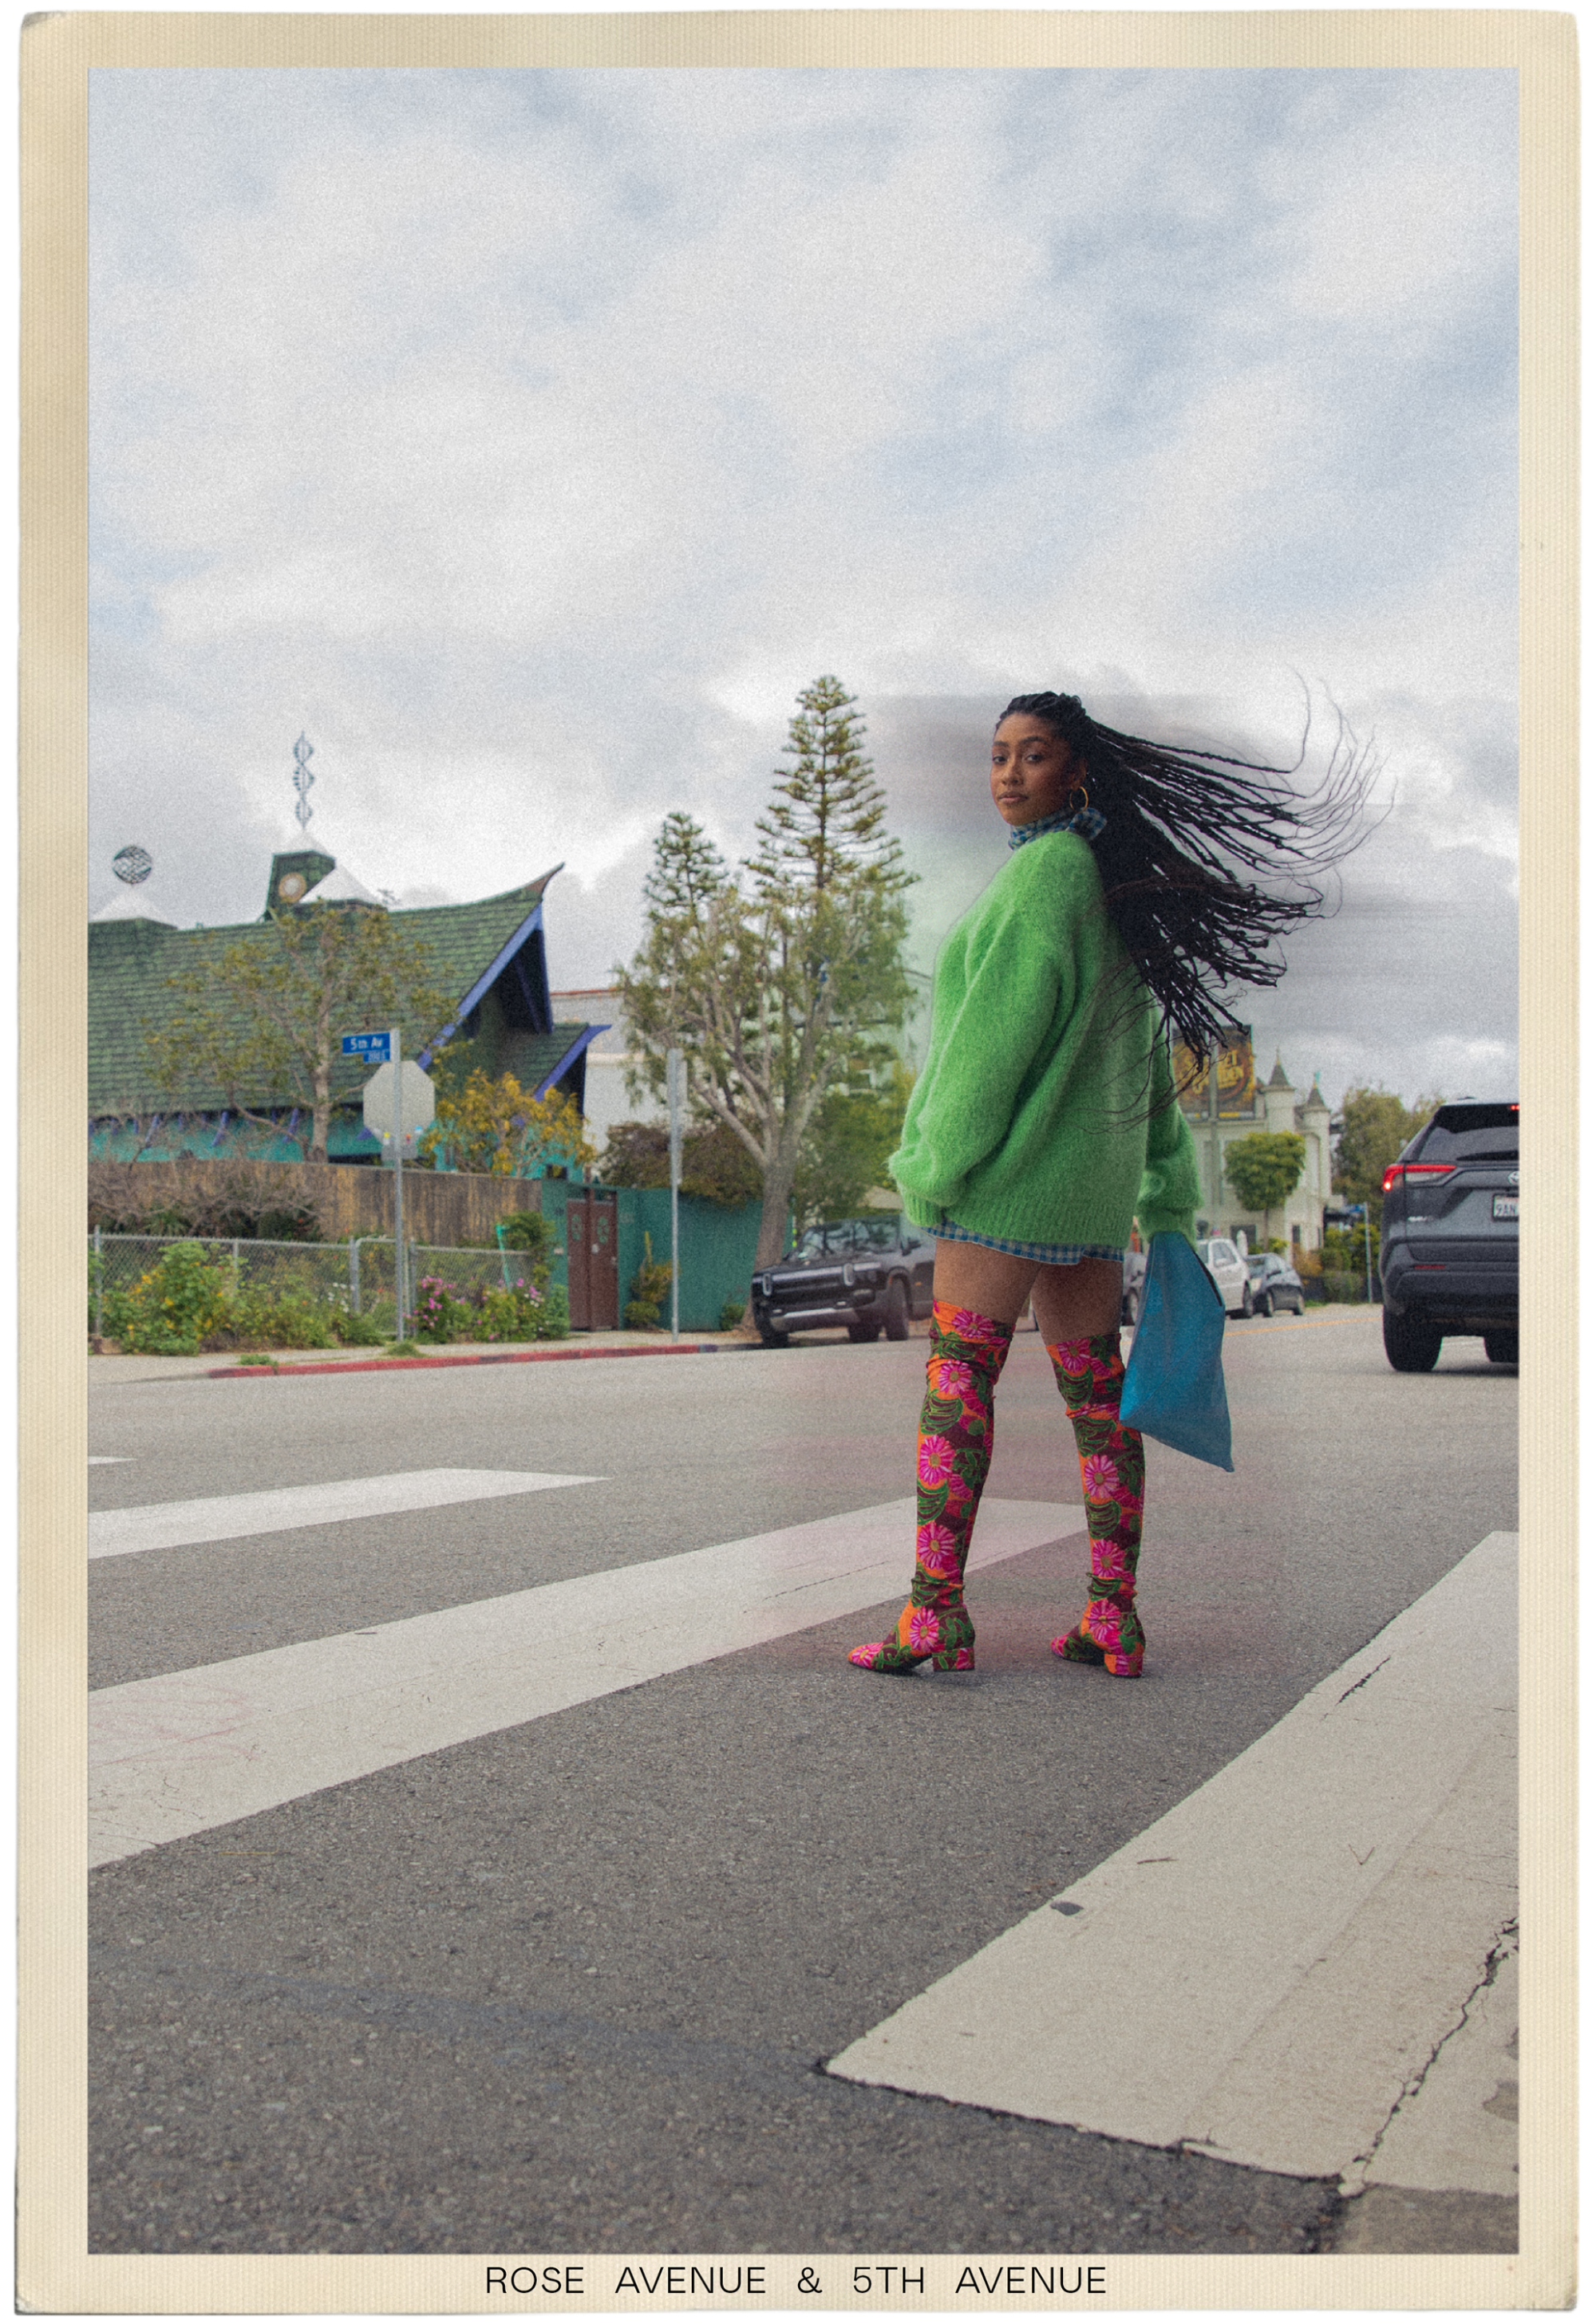 Samira Ibrahim on a crosswalk, her hair swept by the wind.